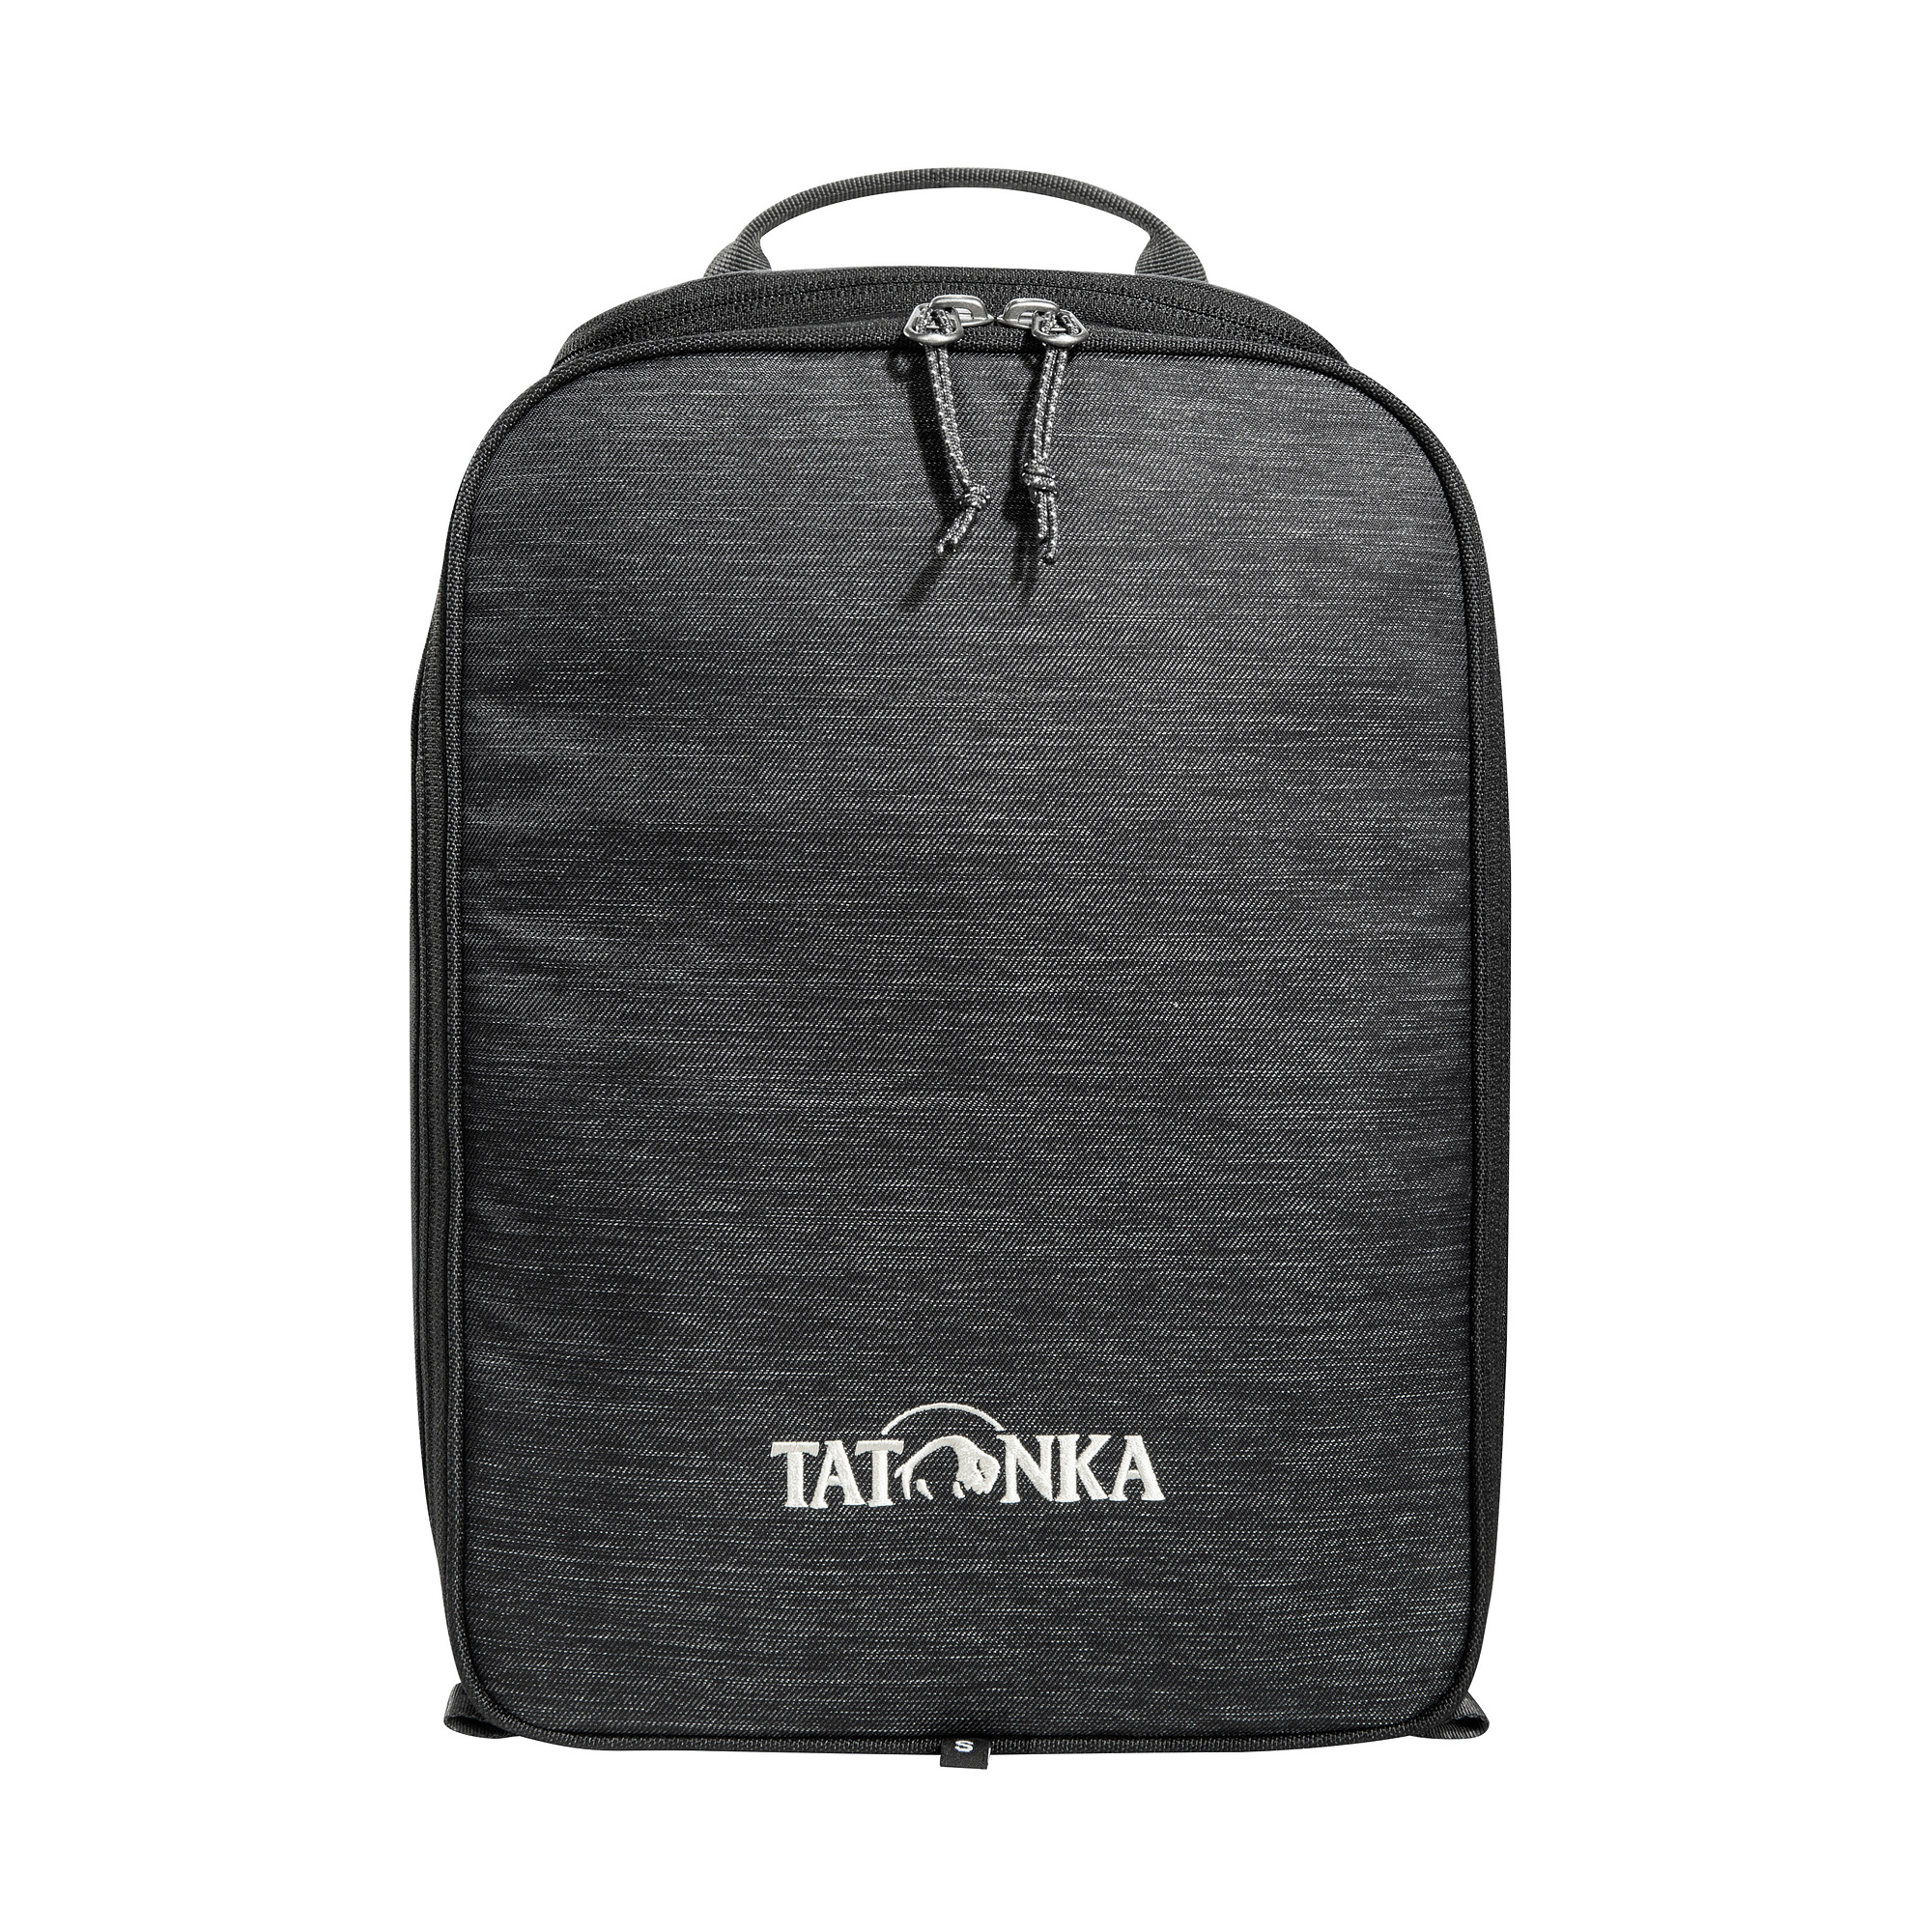 Tatonka Cooler Bag S off black schwarz Sonstige Taschen 4013236336313